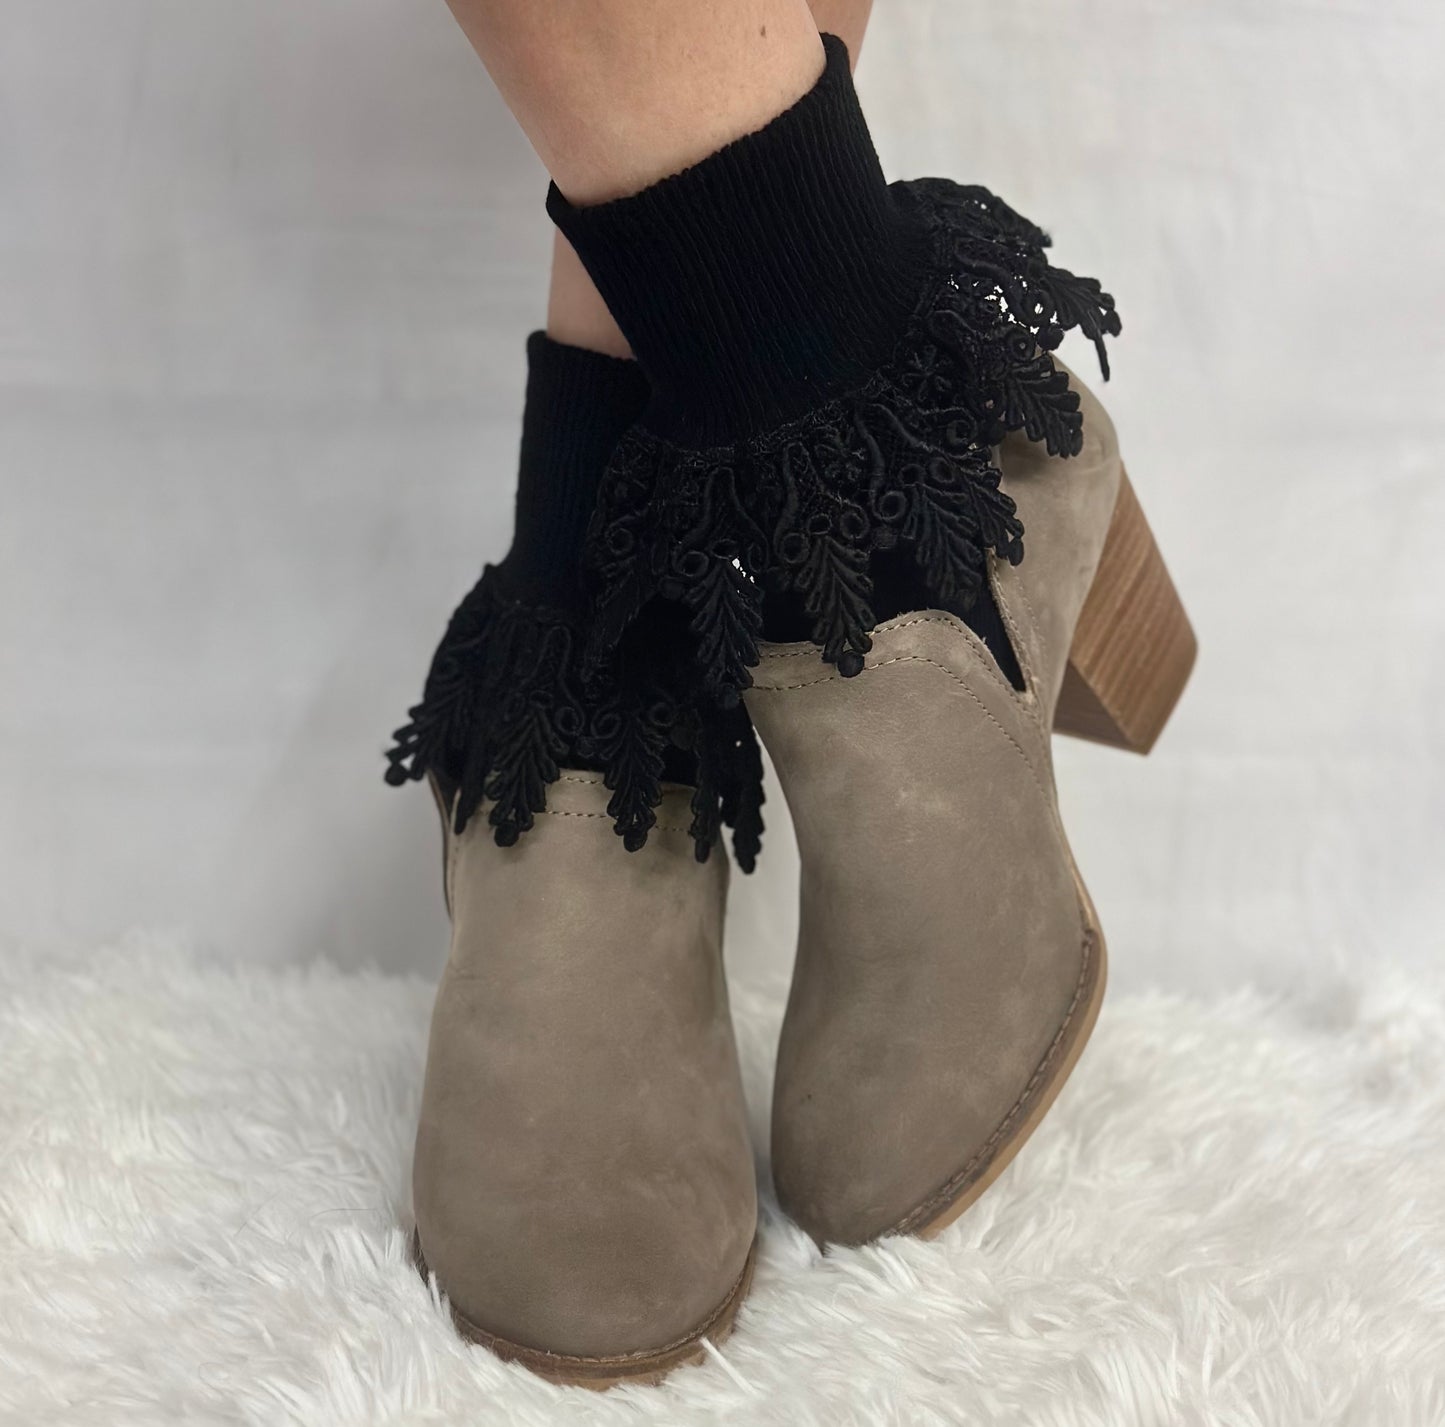 ORIGINAL  lace cuff socks - black